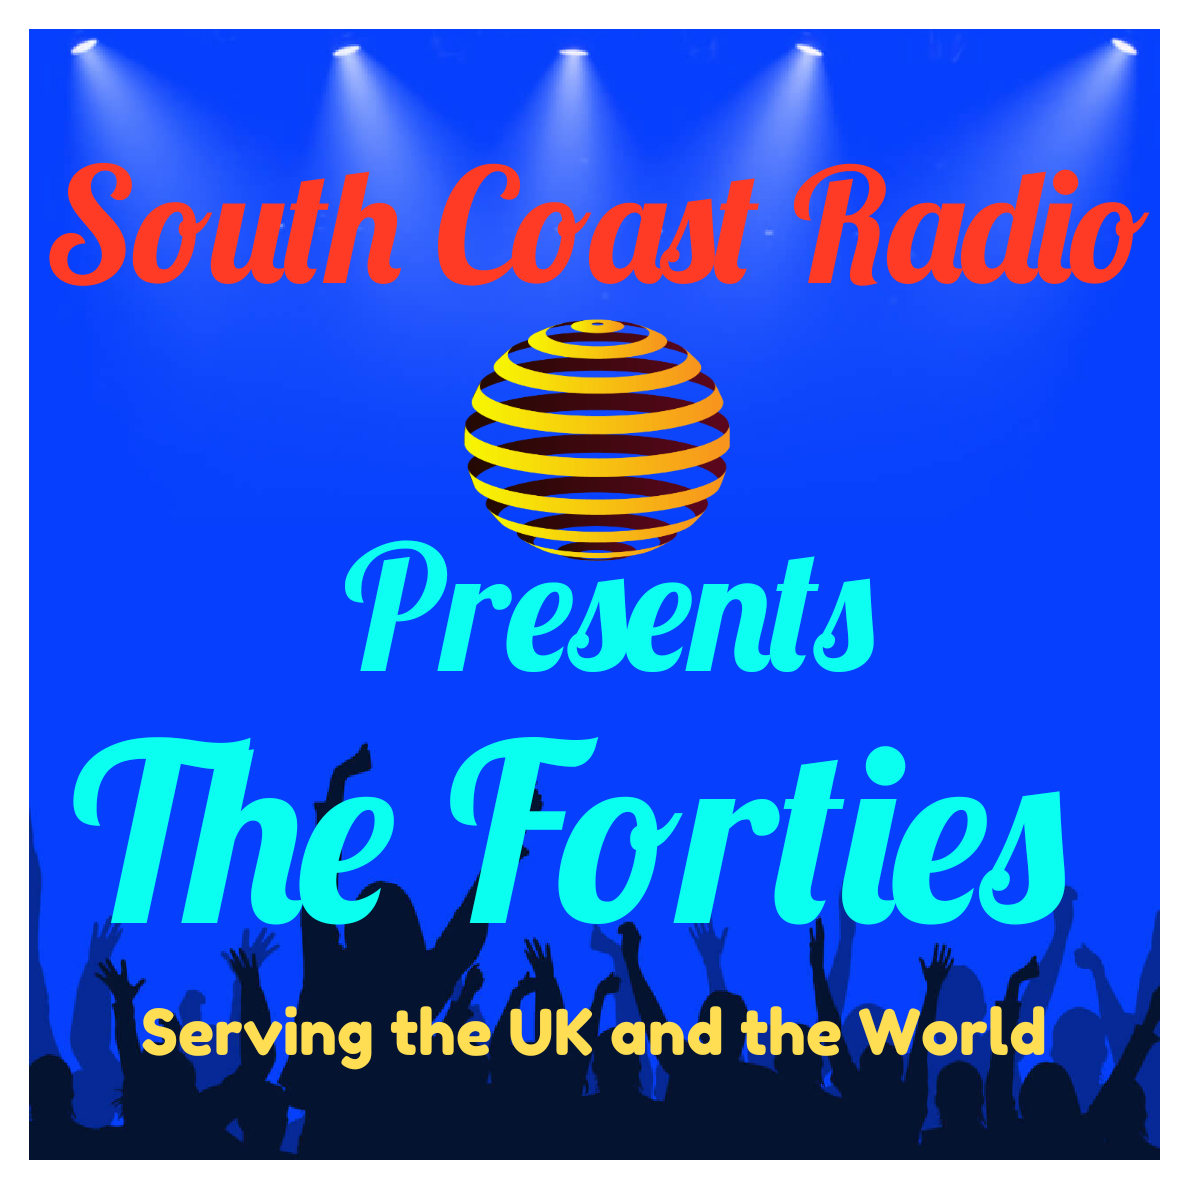 South Coast Radio 40s